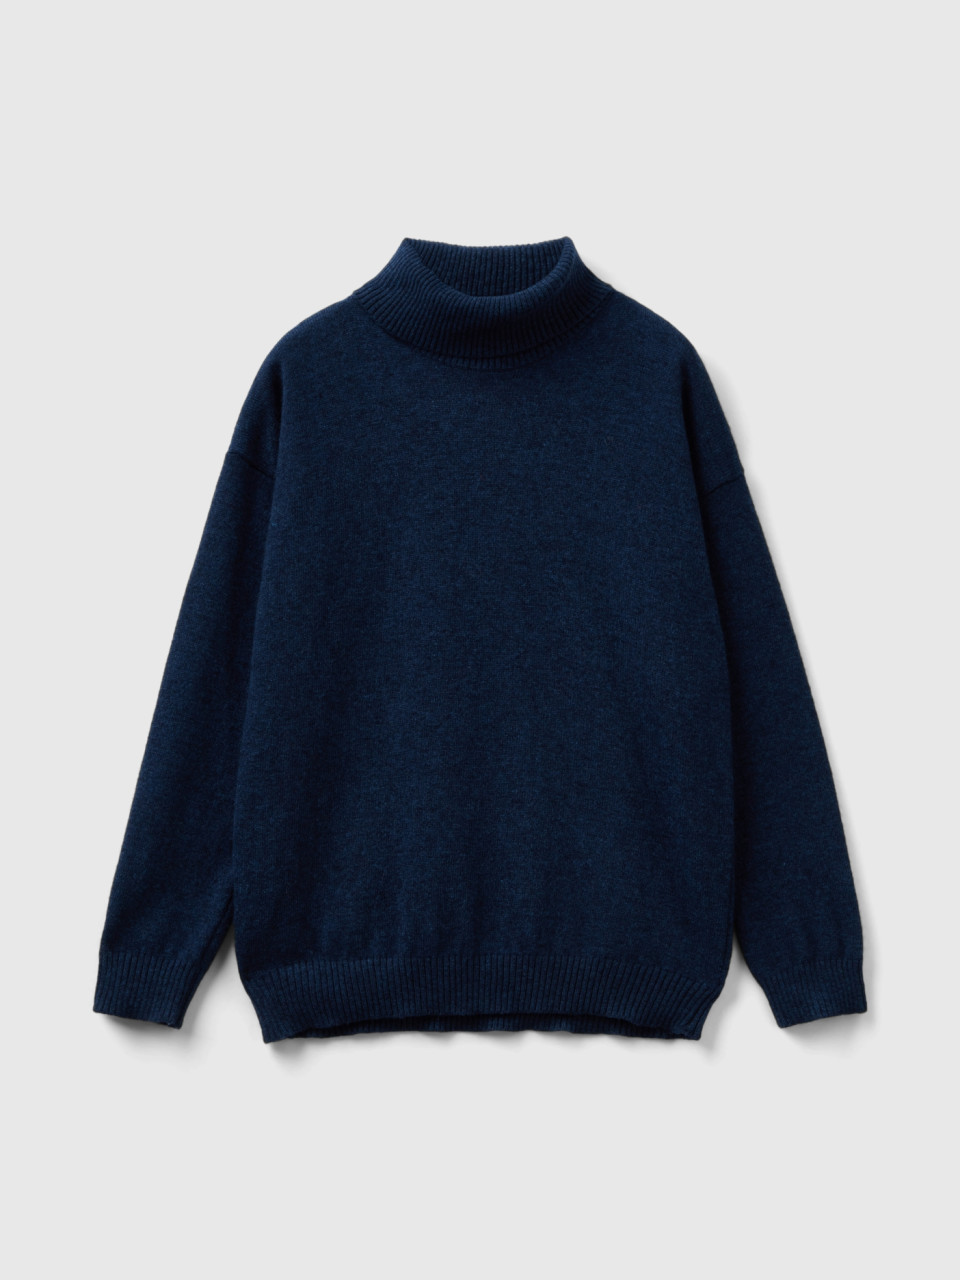 Benetton, Turtleneck Sweater In Cashmere And Wool Blend, Dark Blue, Kids